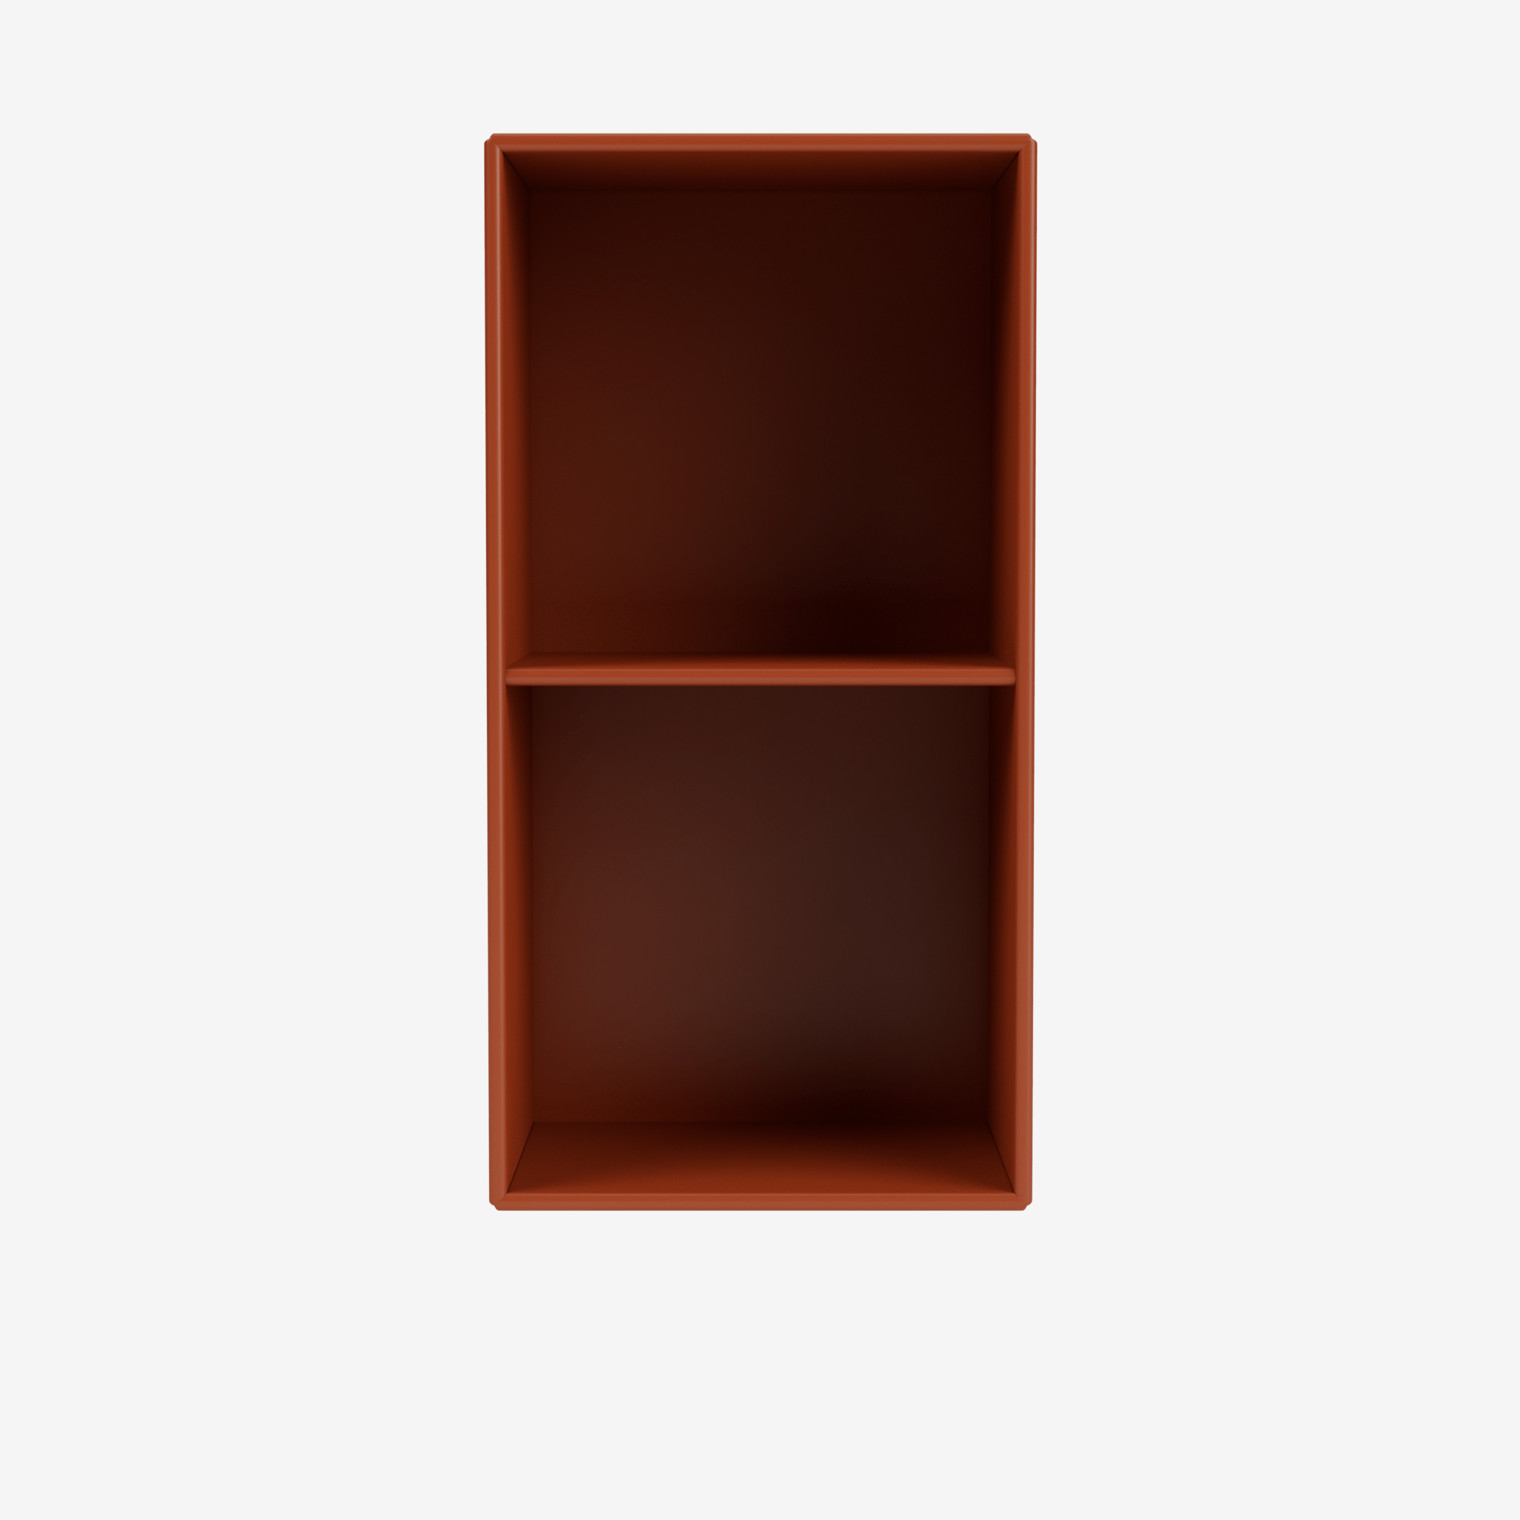 Shelf 1261